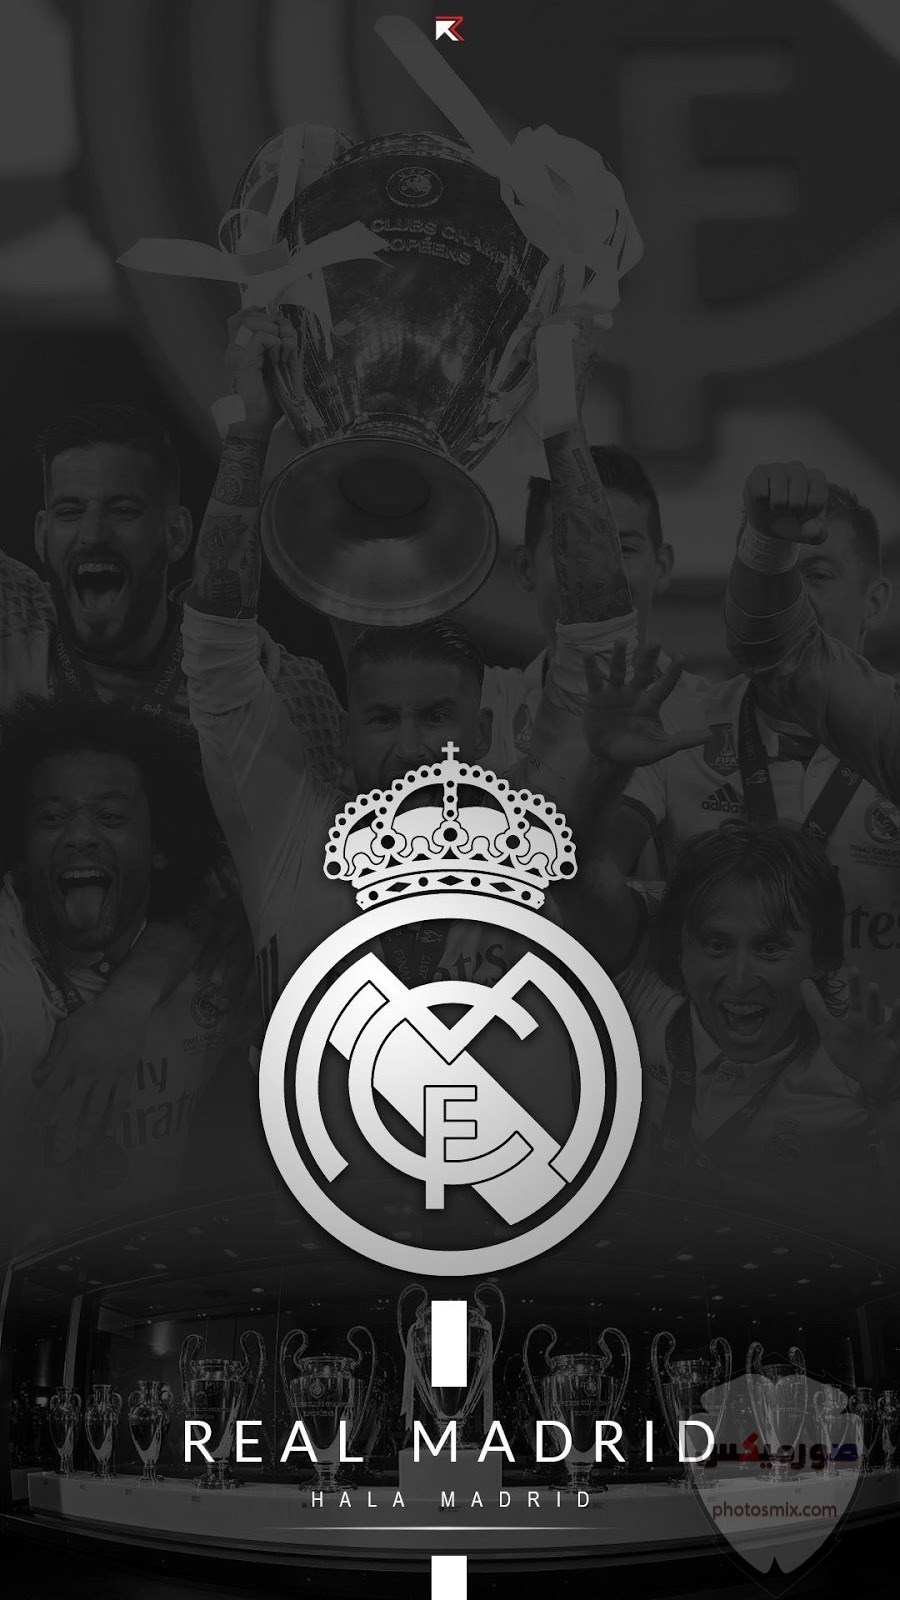 صور ريال مدريد 2020خلفيات ورمزيات ريال مدريد صور لاعبي ريال مدريد real madrid 11